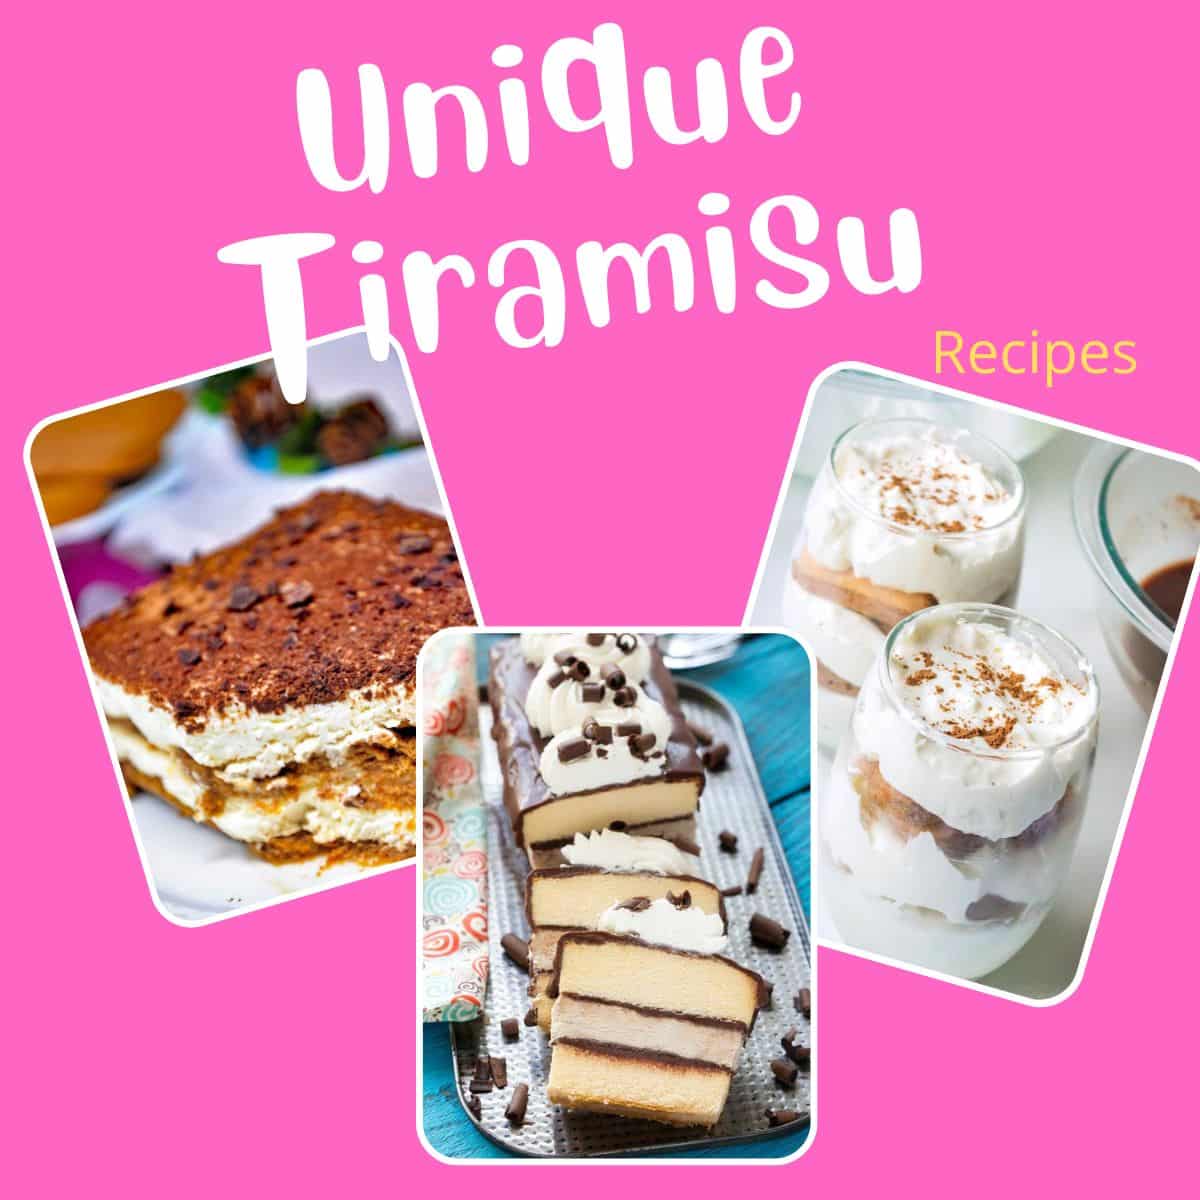 24Bite: Unique Tiramisu Recipes from Christian Guzman